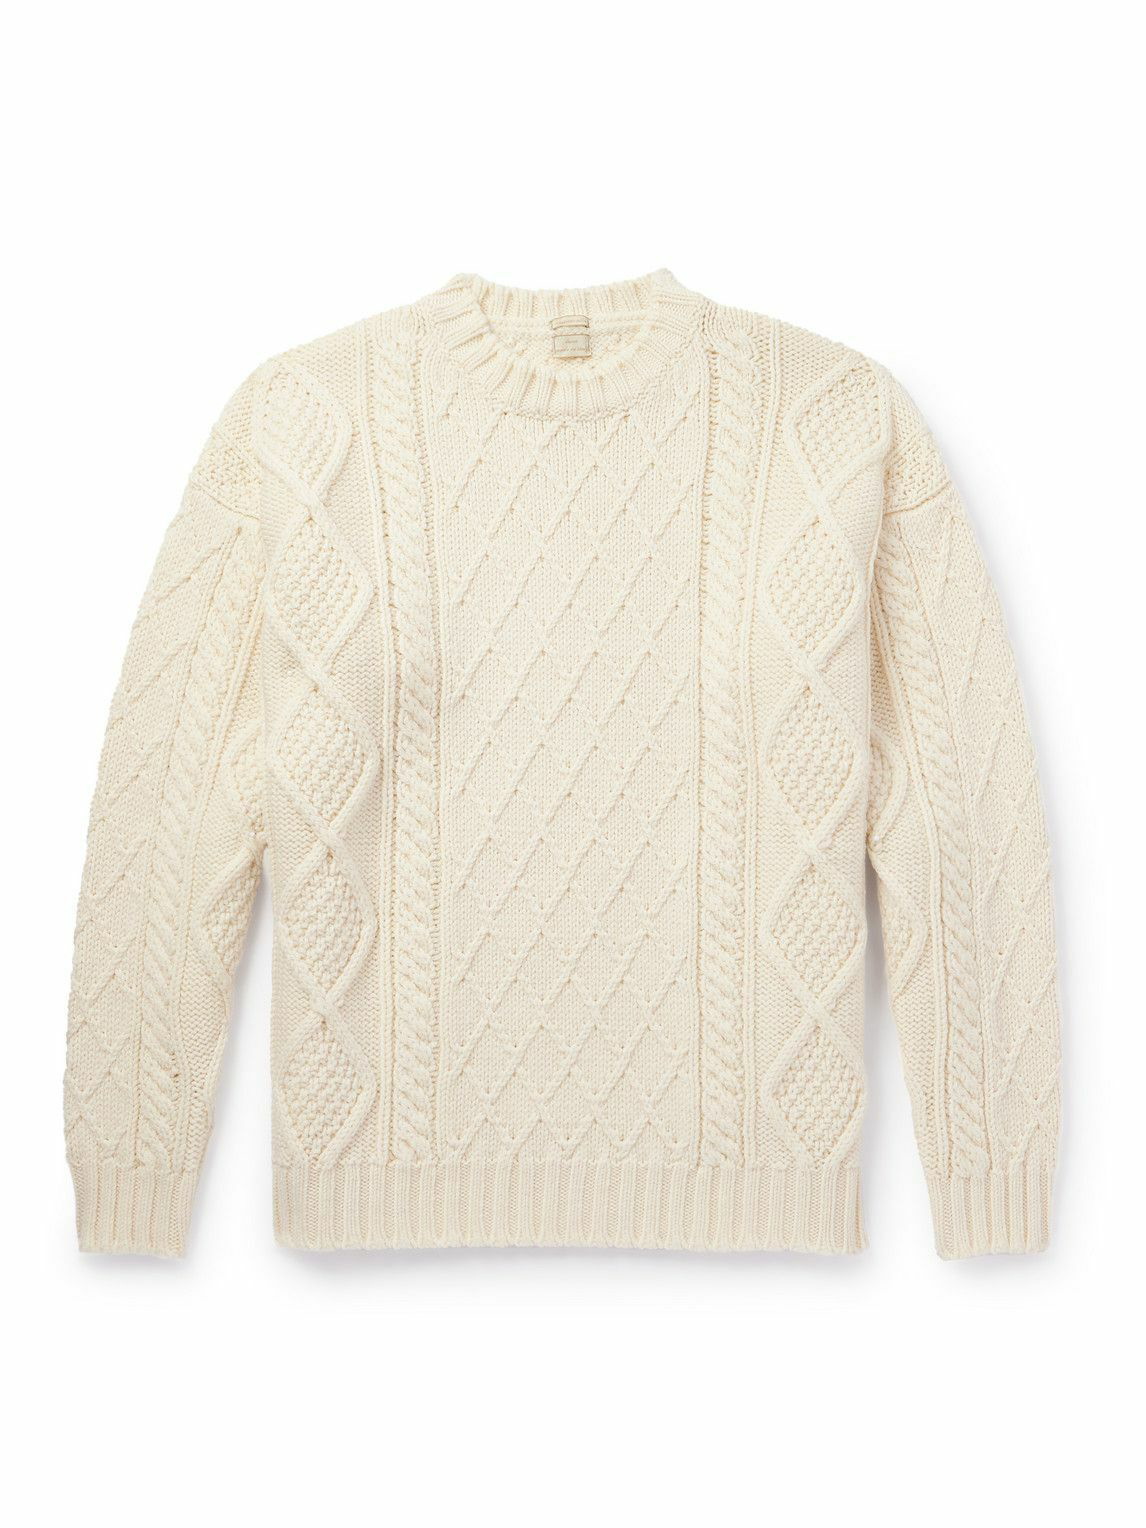 Massimo Alba - James Cable-Knit Wool Sweater - Neutrals Massimo Alba